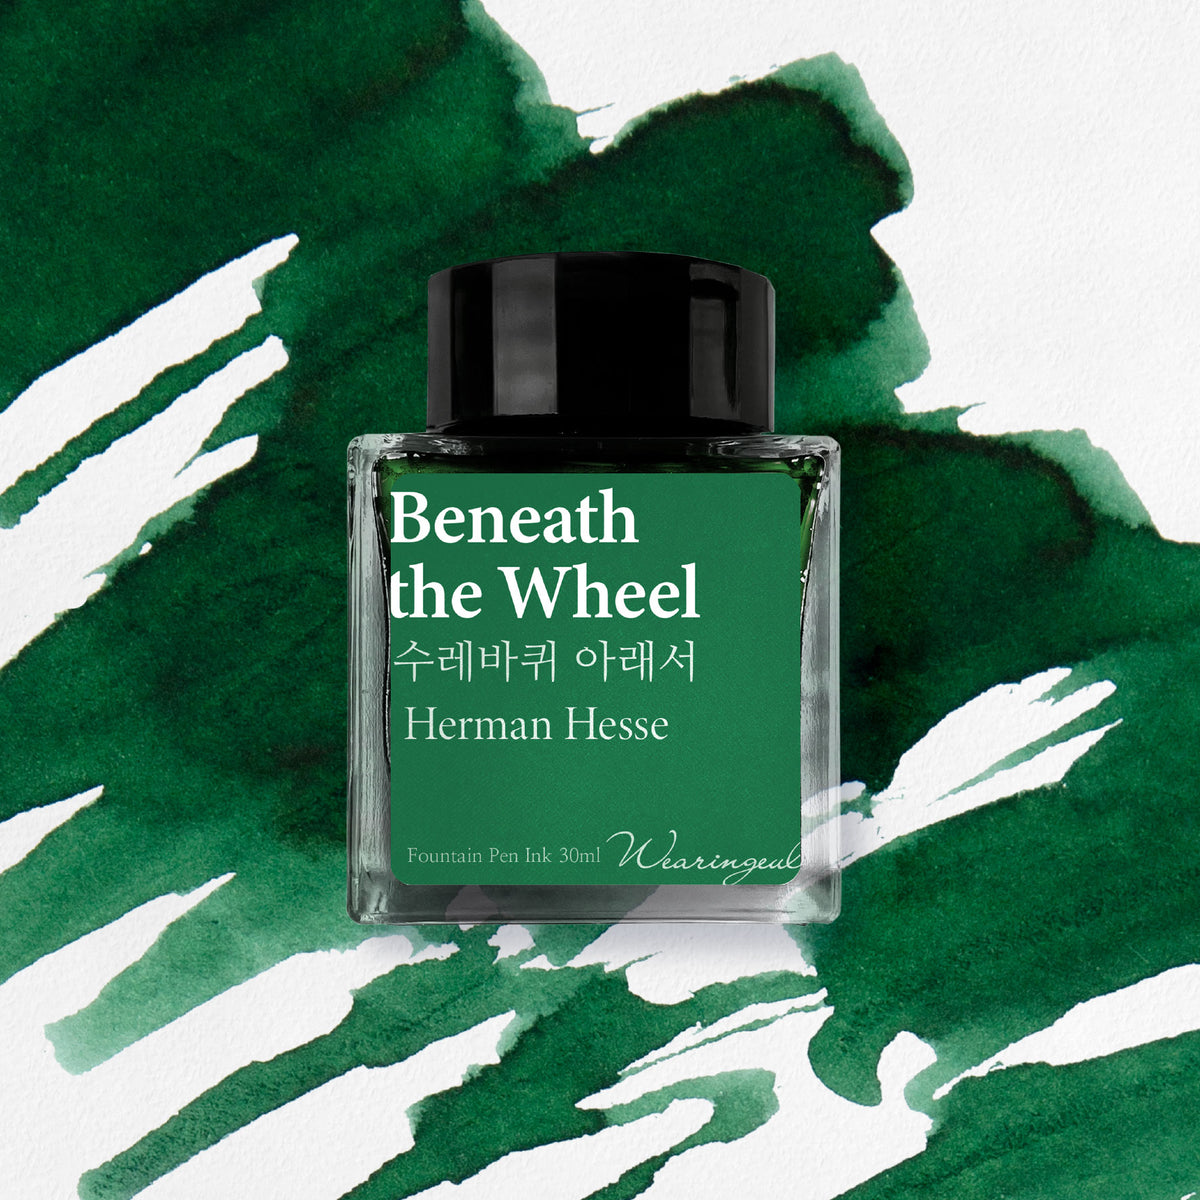 Wearingeul - Fountain Pen Ink - Beneath the Wheel